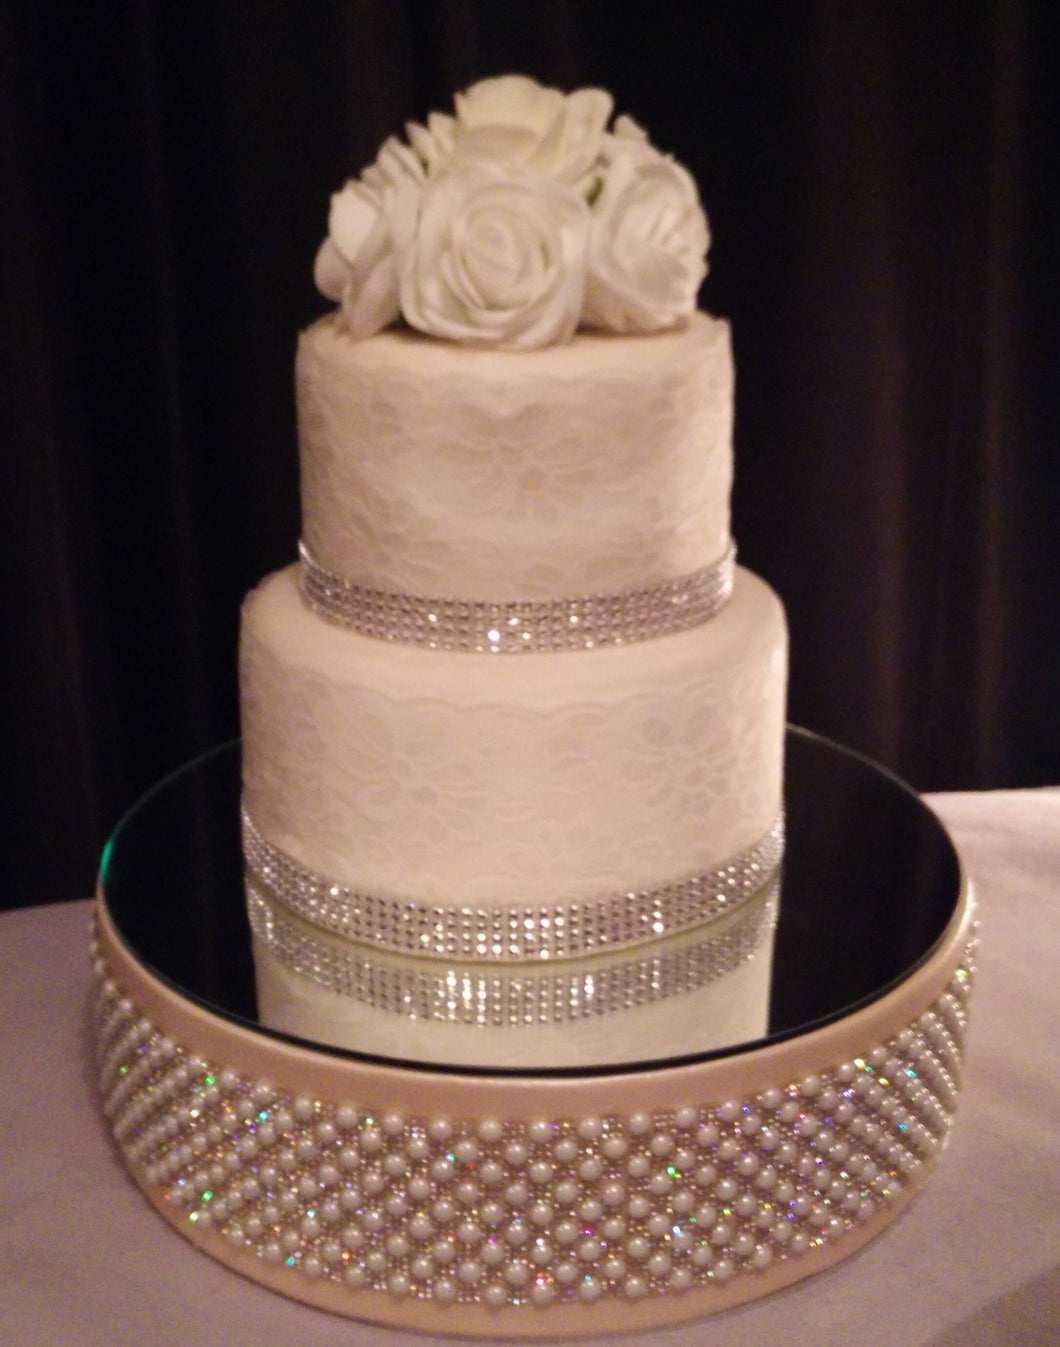 Wedding cake stand  Podium Vintage inspired Pearl & Rhinestone cake holder  all sizes round and square by Crystal wedding uk